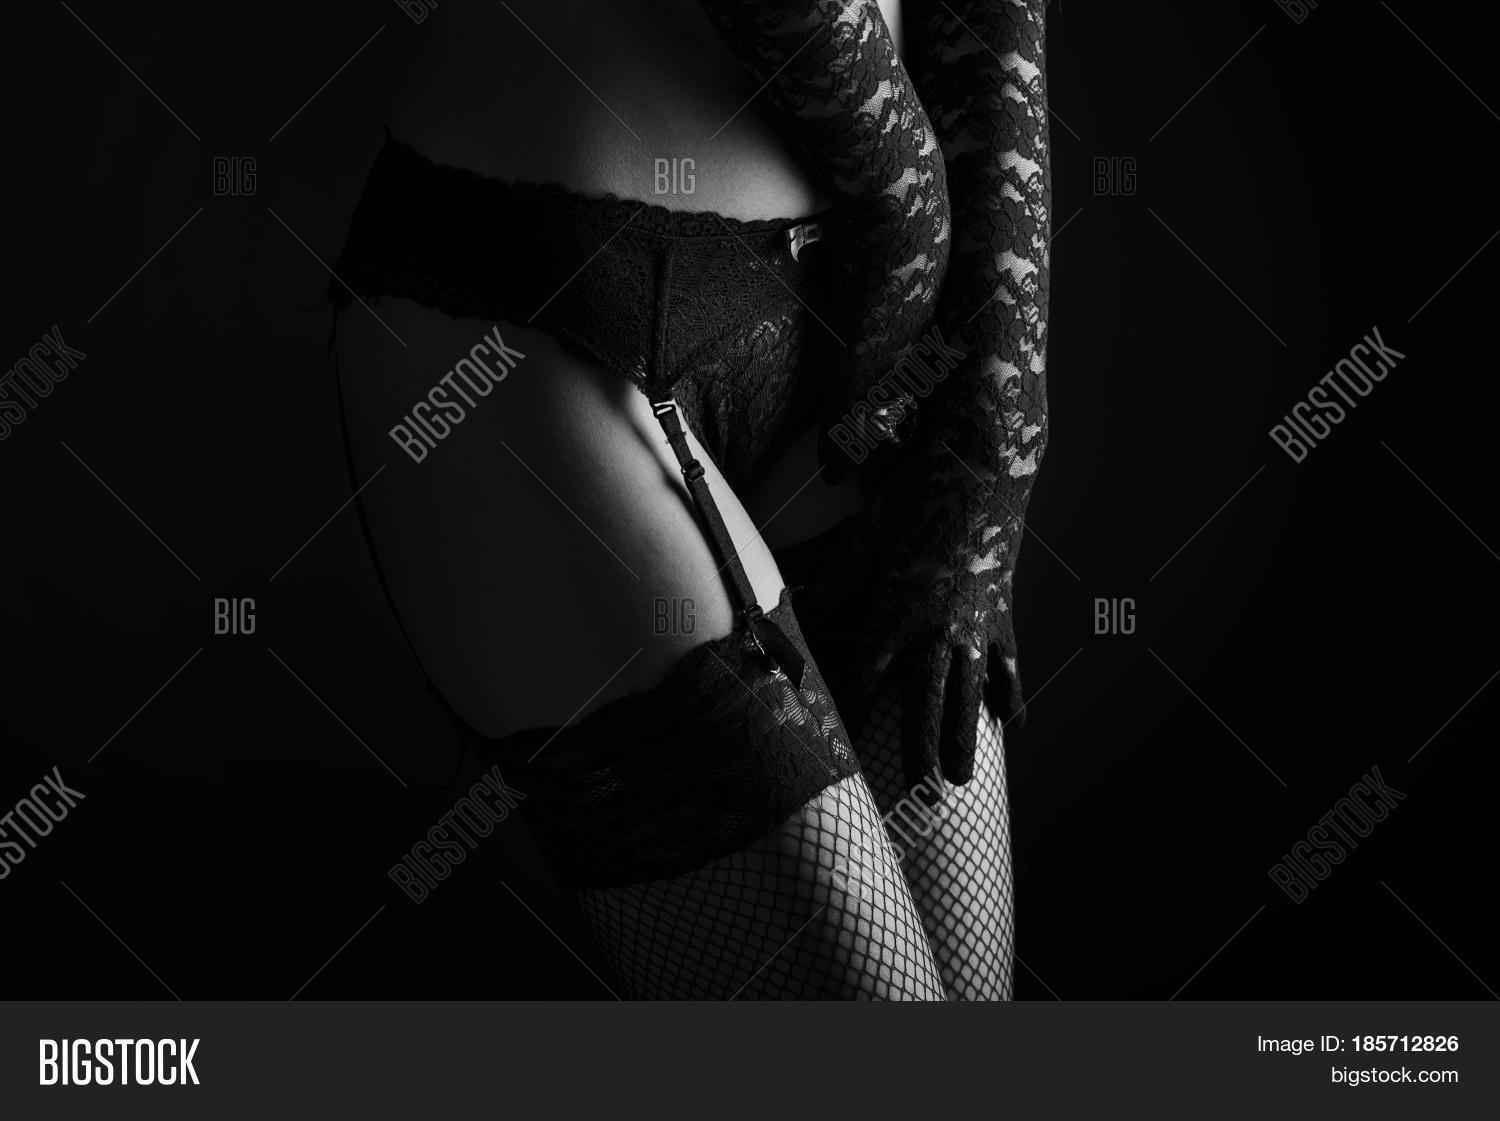 damon blackburn add sexy women black and white photo